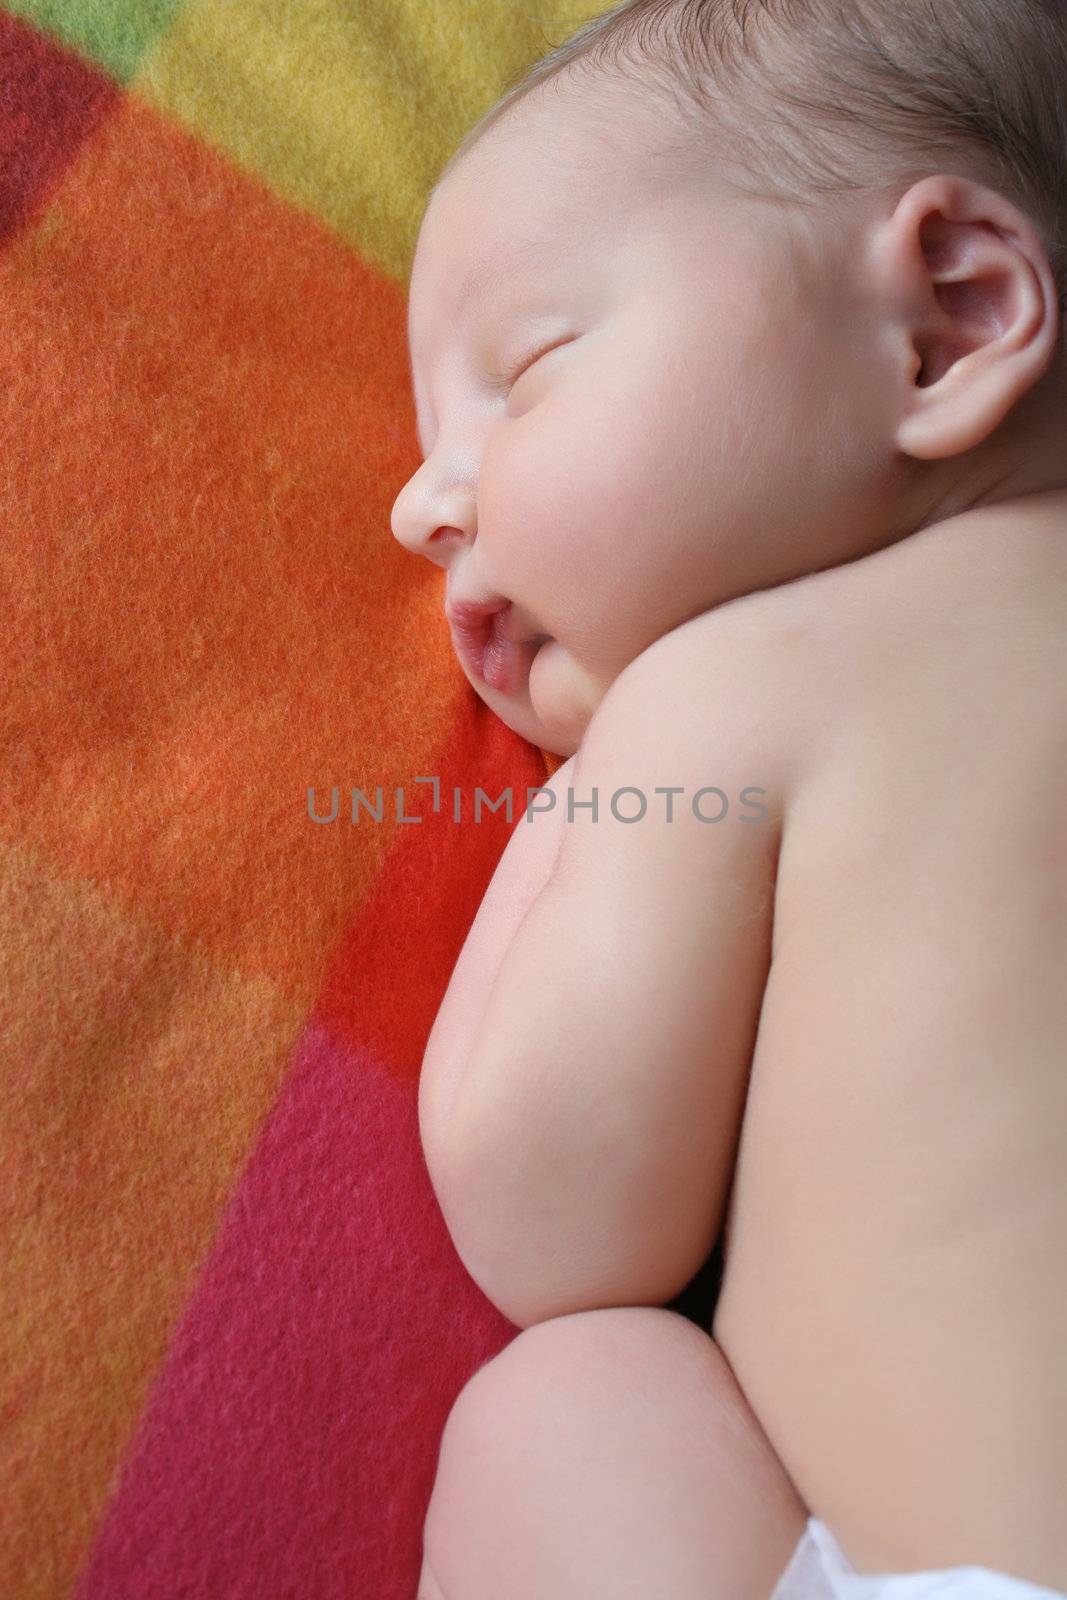 Newborn baby sleeping on a colorful soft blanket